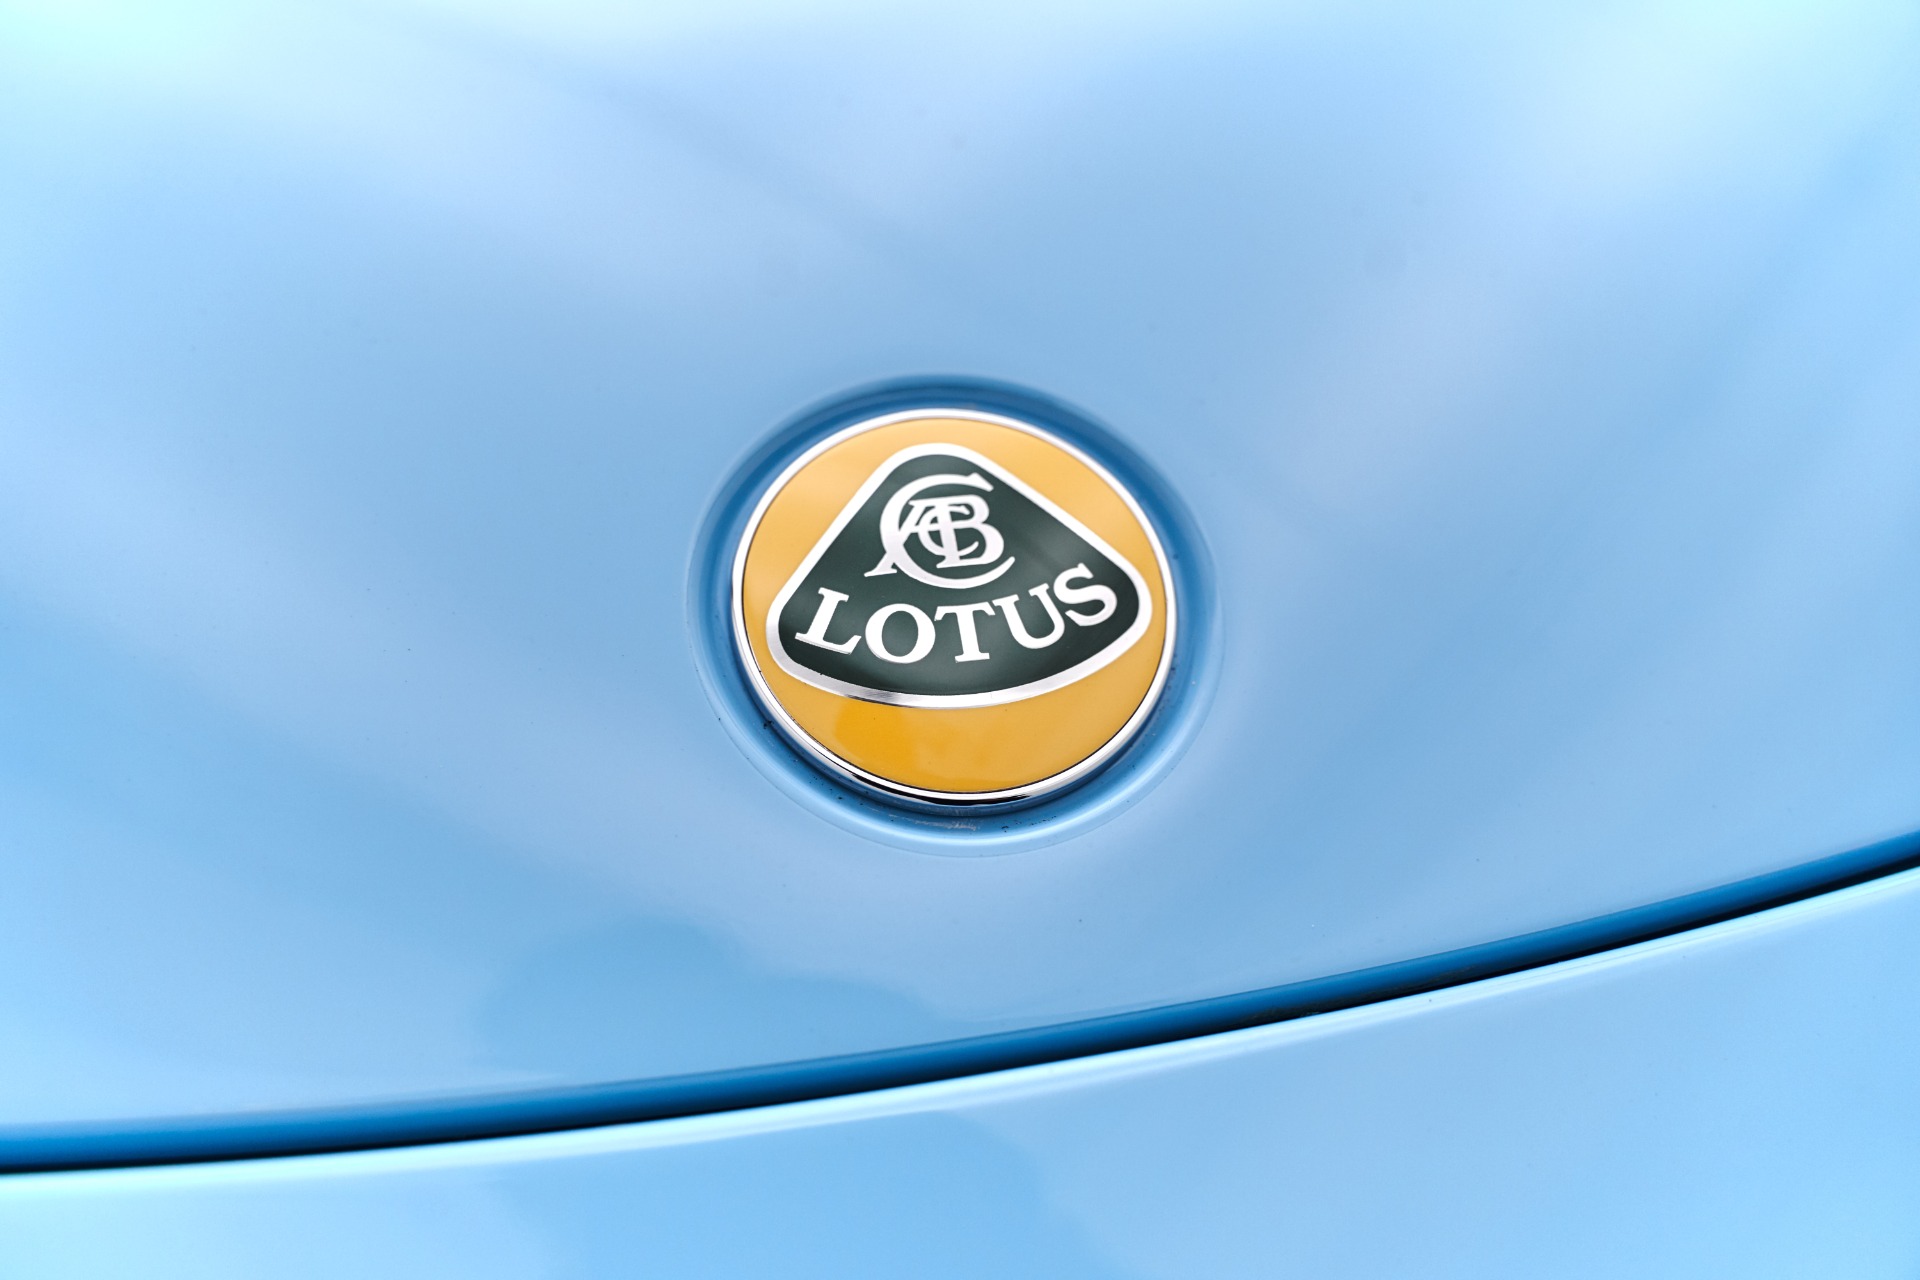 Lotus logo, Vector Logo of Lotus brand free download (eps, ai, png, cdr)  formats